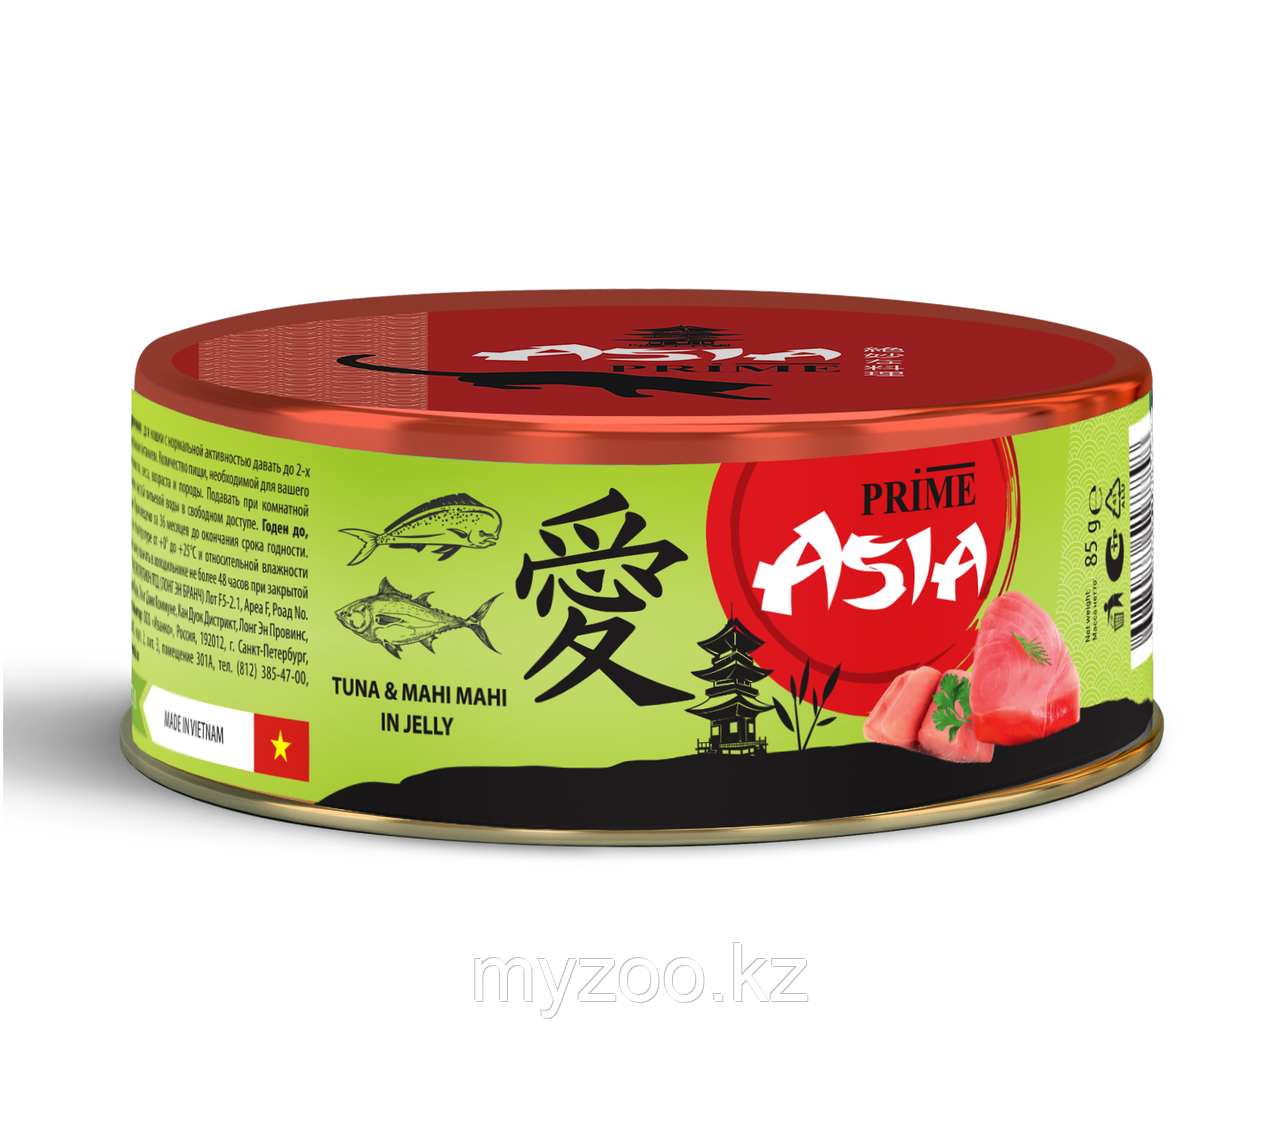 Prime Asia консервы для кошек тунец с рыбой махи-махи в желе, 85гр